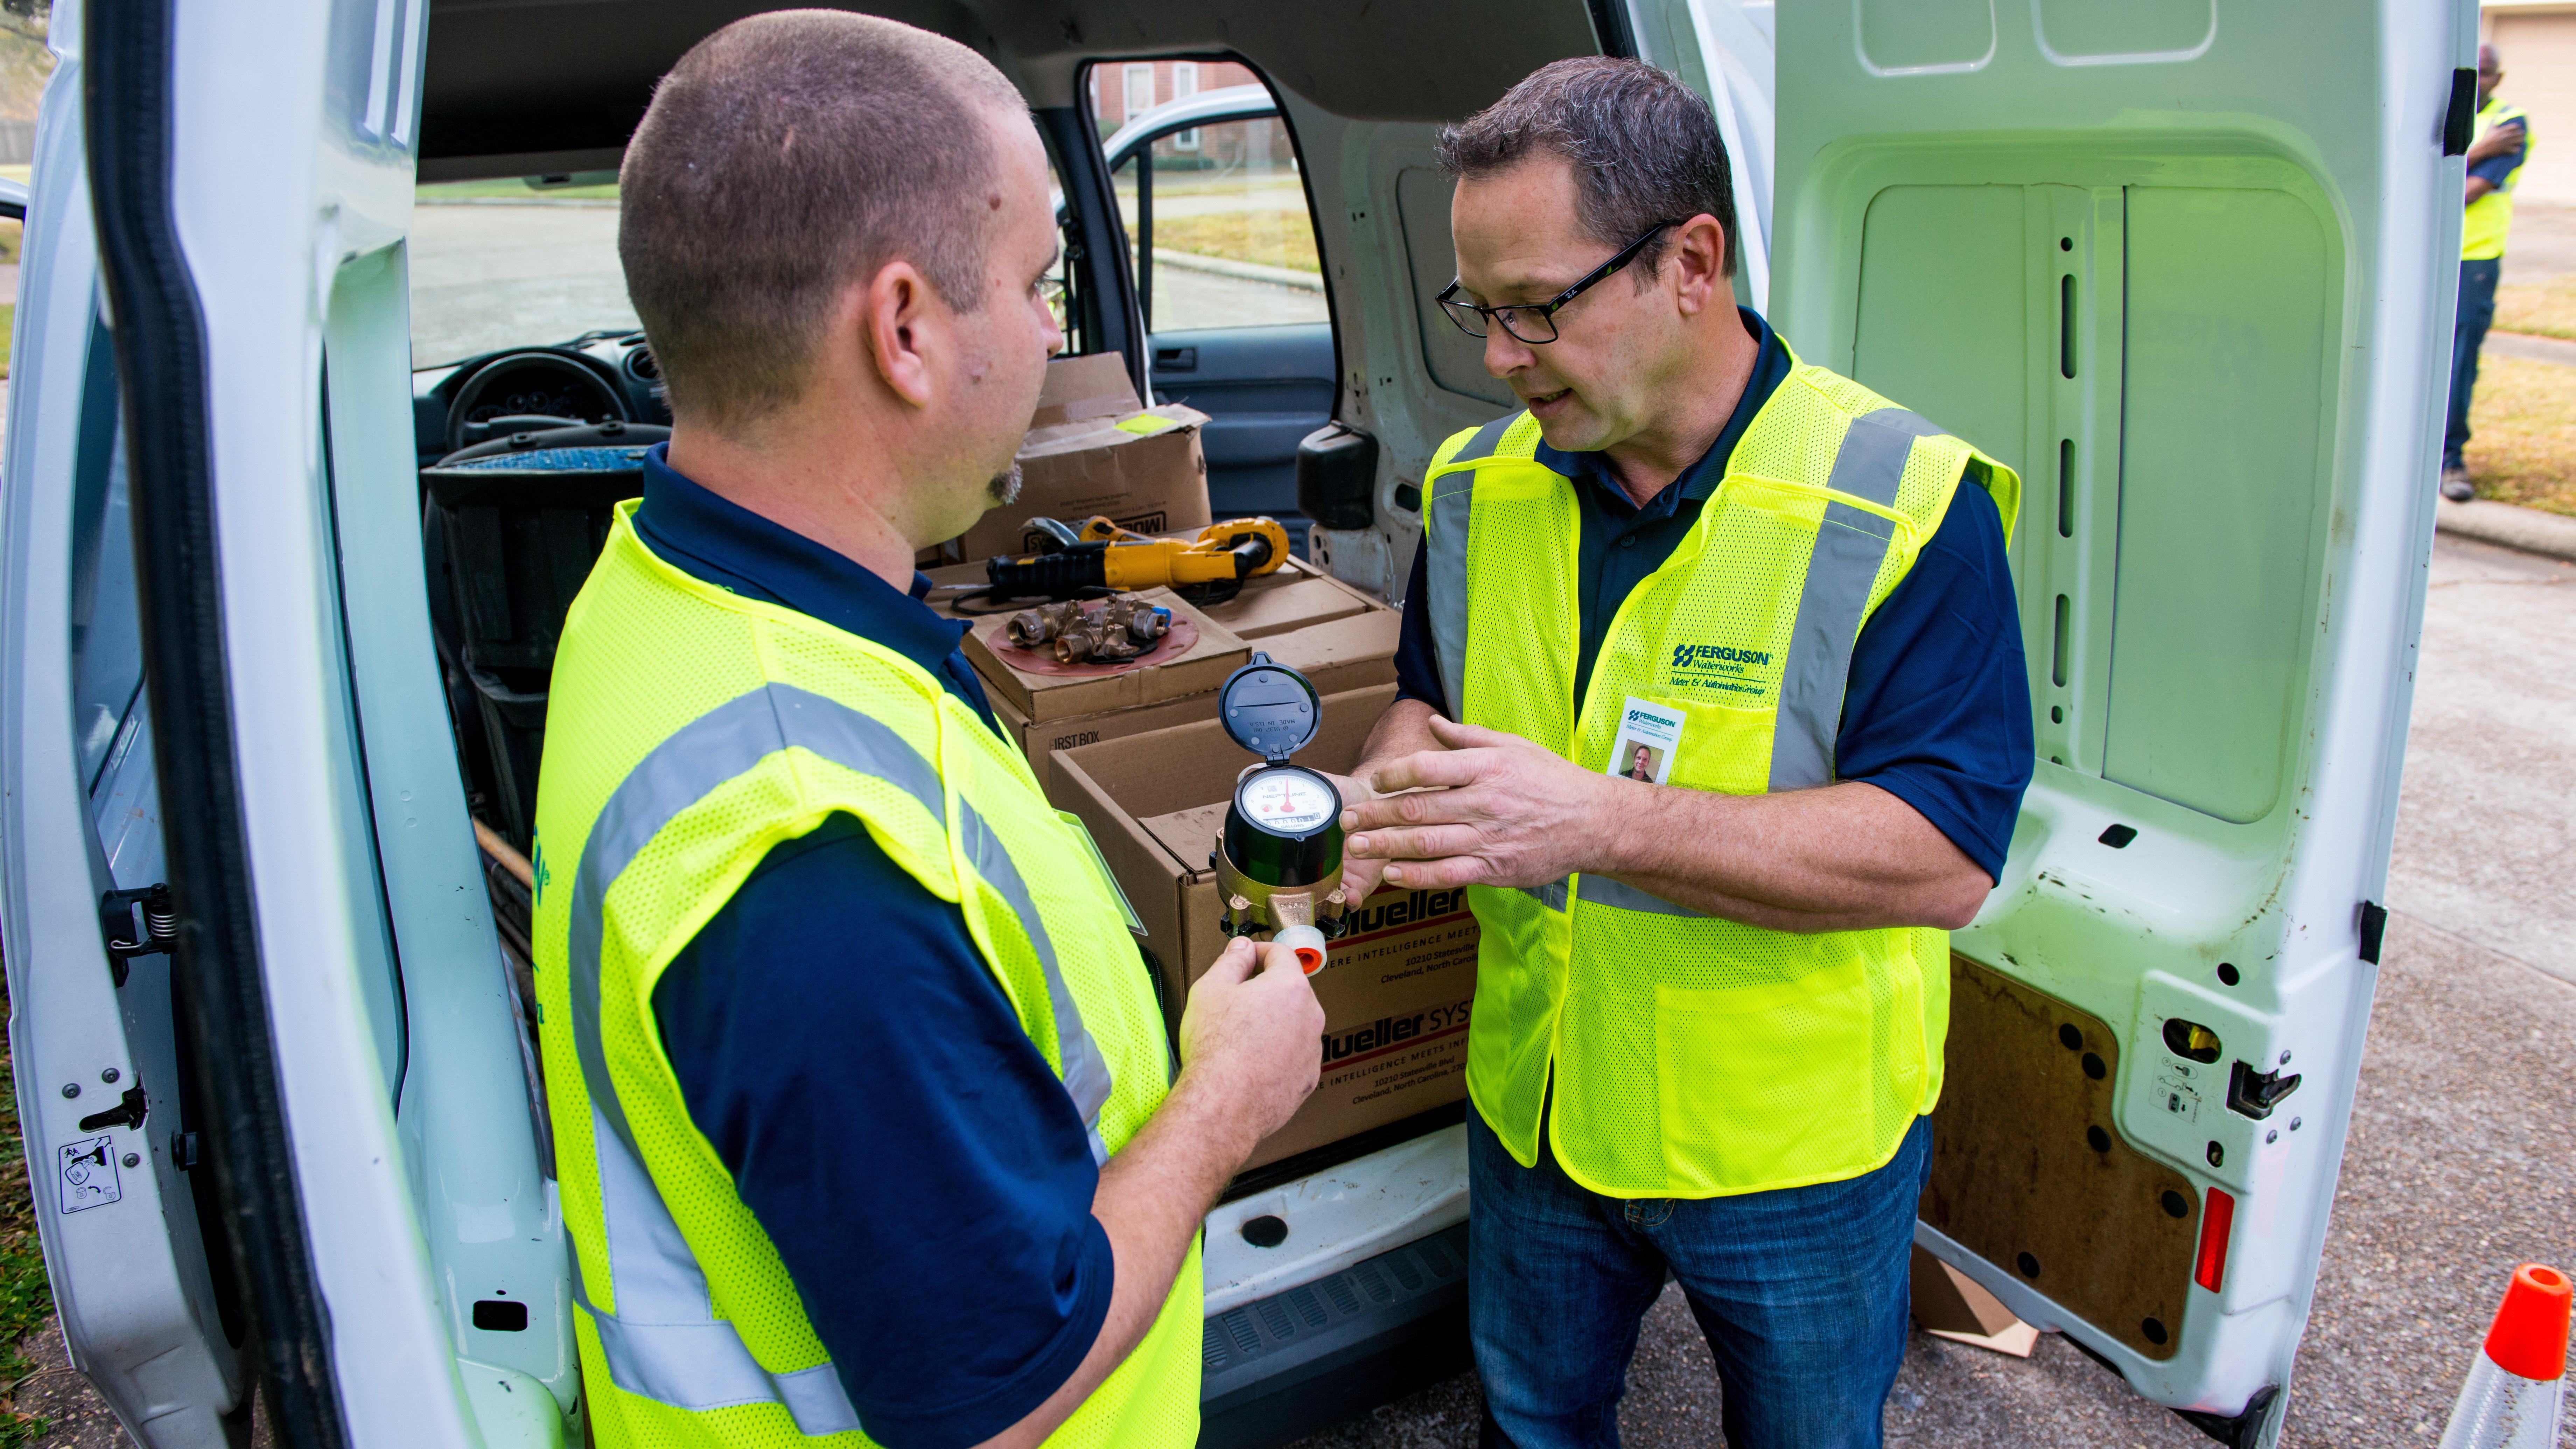 Two Ferguson associates discuss a water meter outside of a work van.